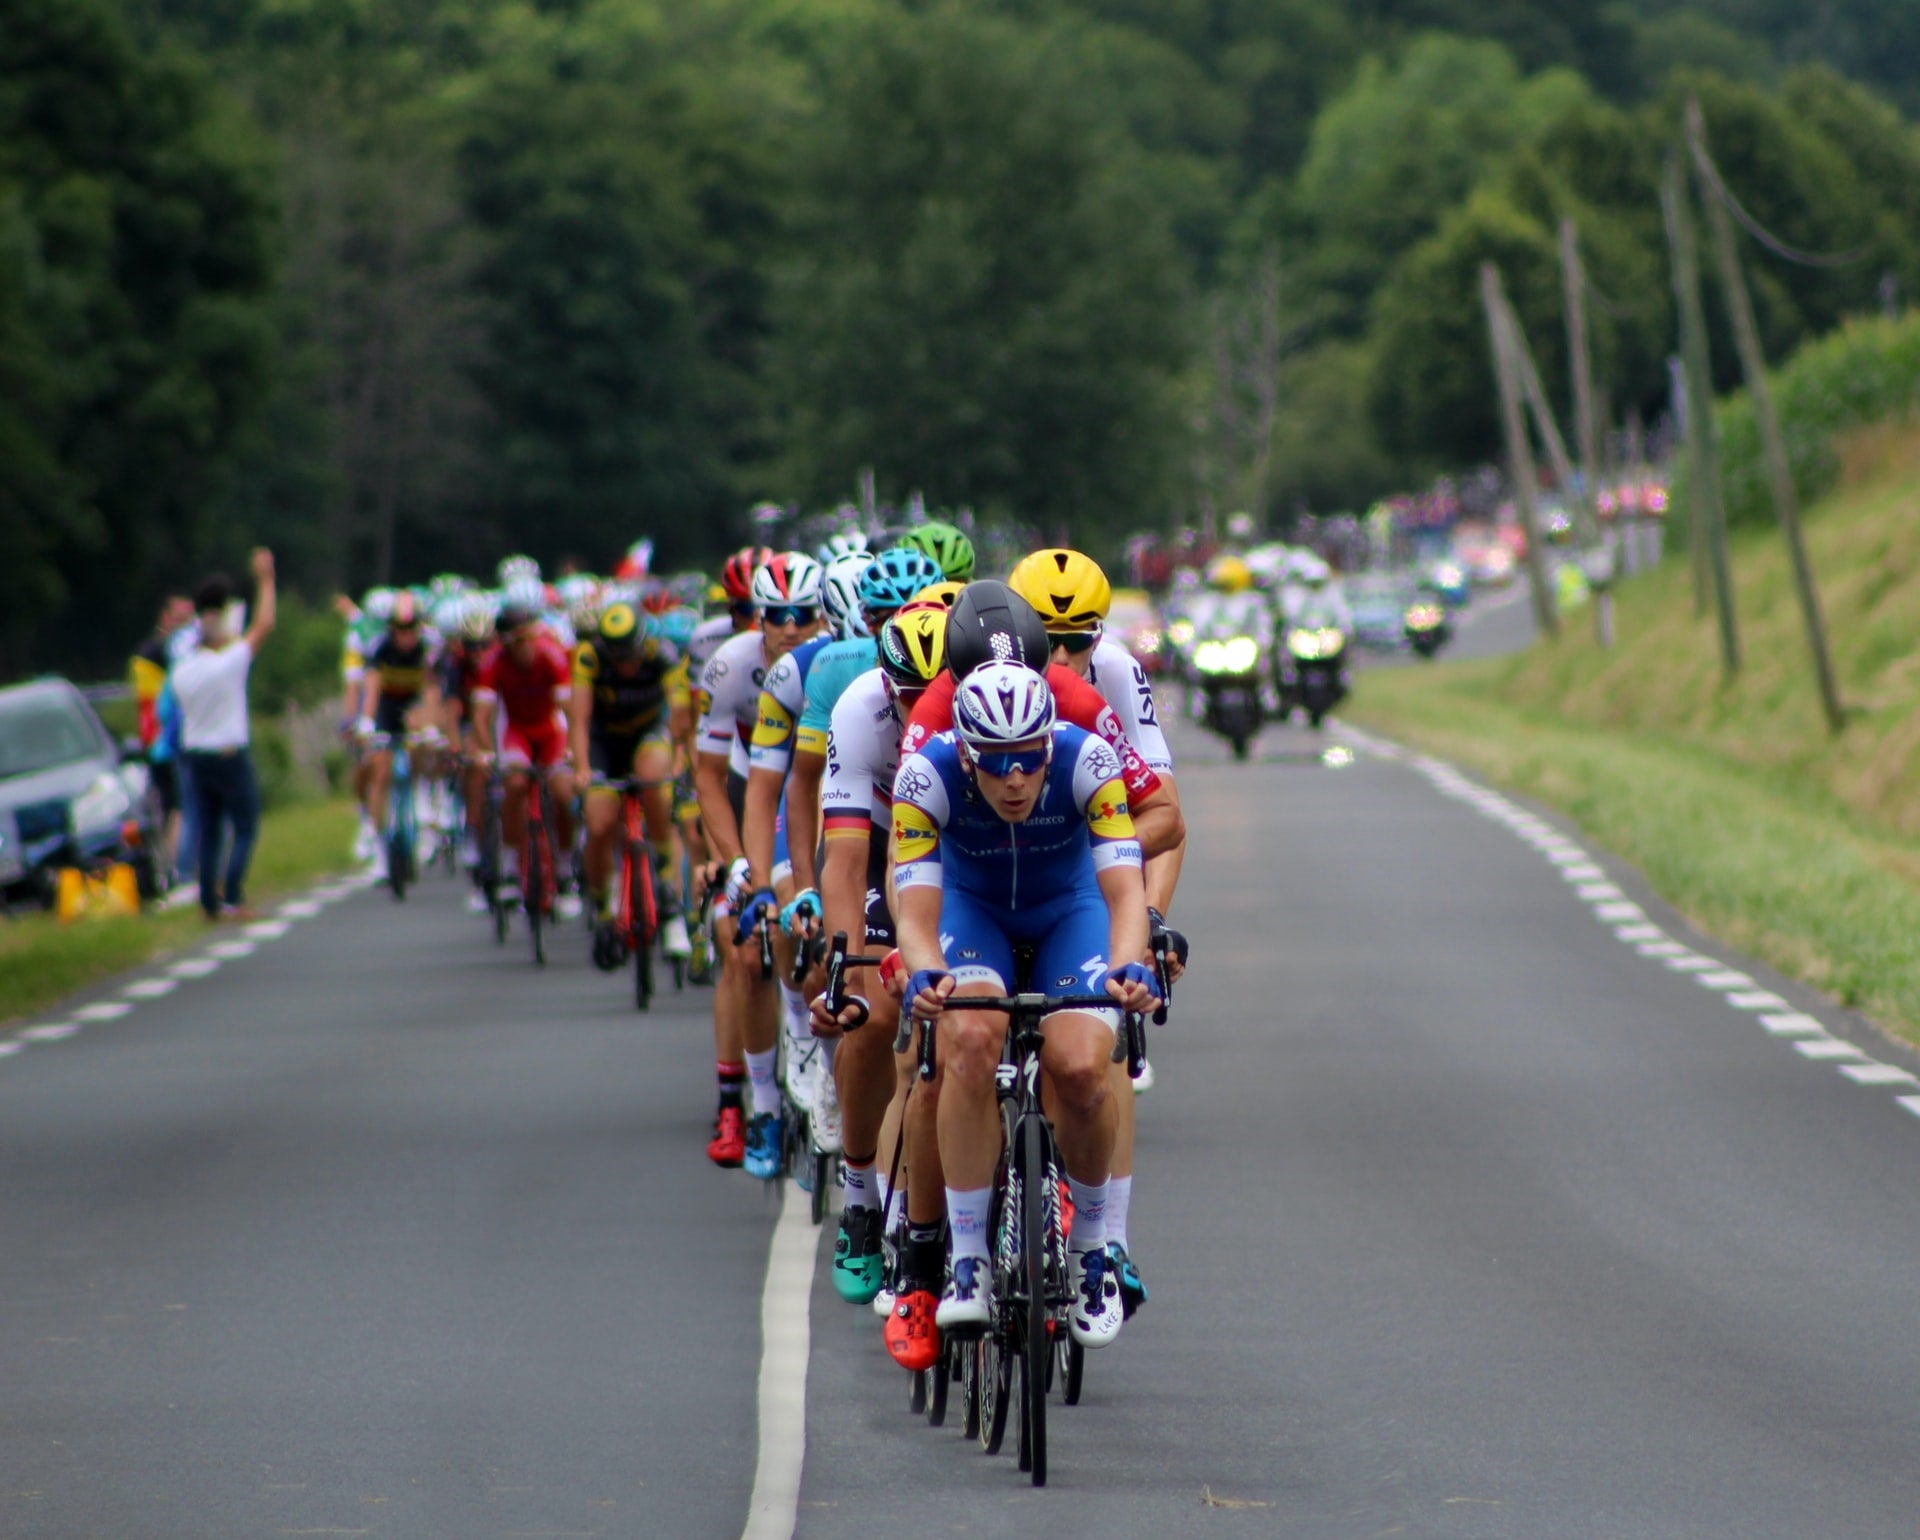 It takes about 120,000 calories to finish the Tour de France